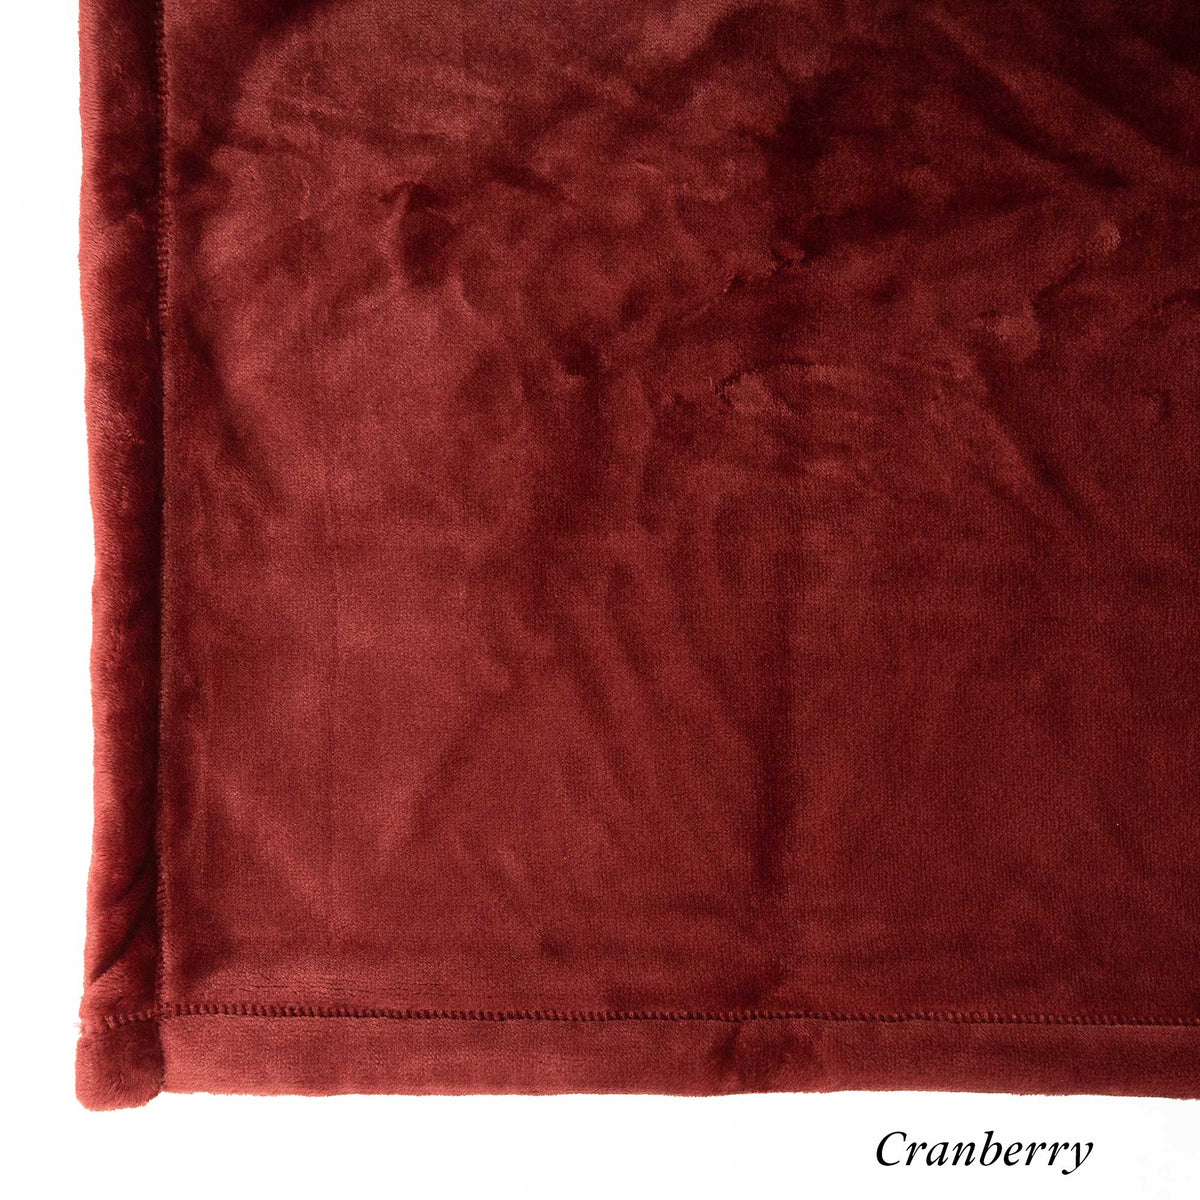 Cranberry Luster Loft Fleece Swatch - Luster Loft Fleece Blankets - Luster Loft Fleece Throws - American Blanket Company